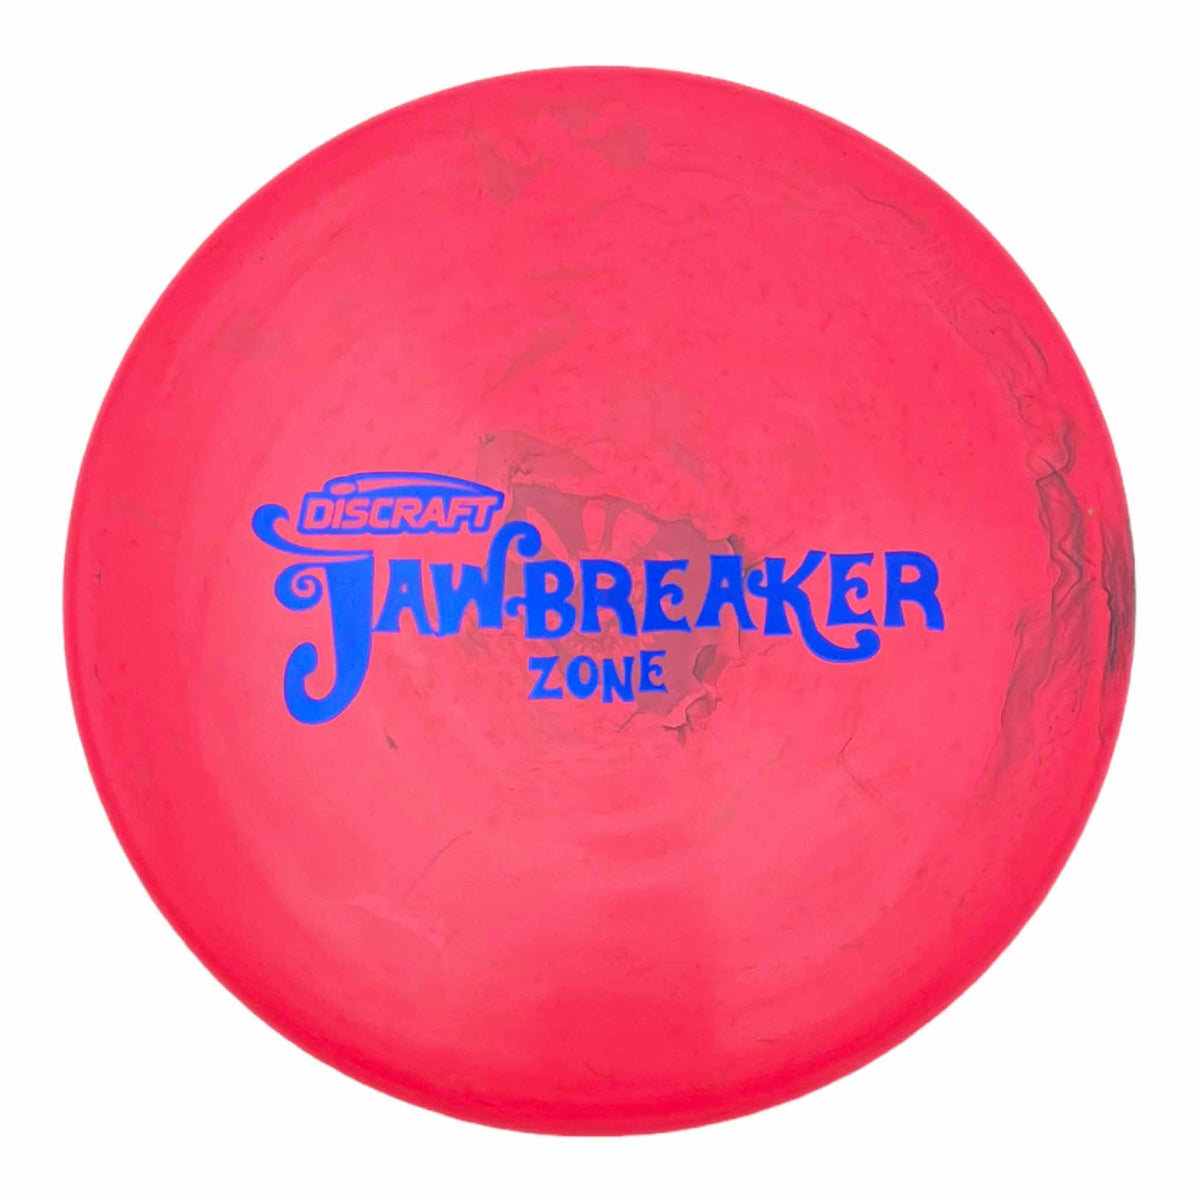 Discraft Jawbreaker Zone putter and approach - Red